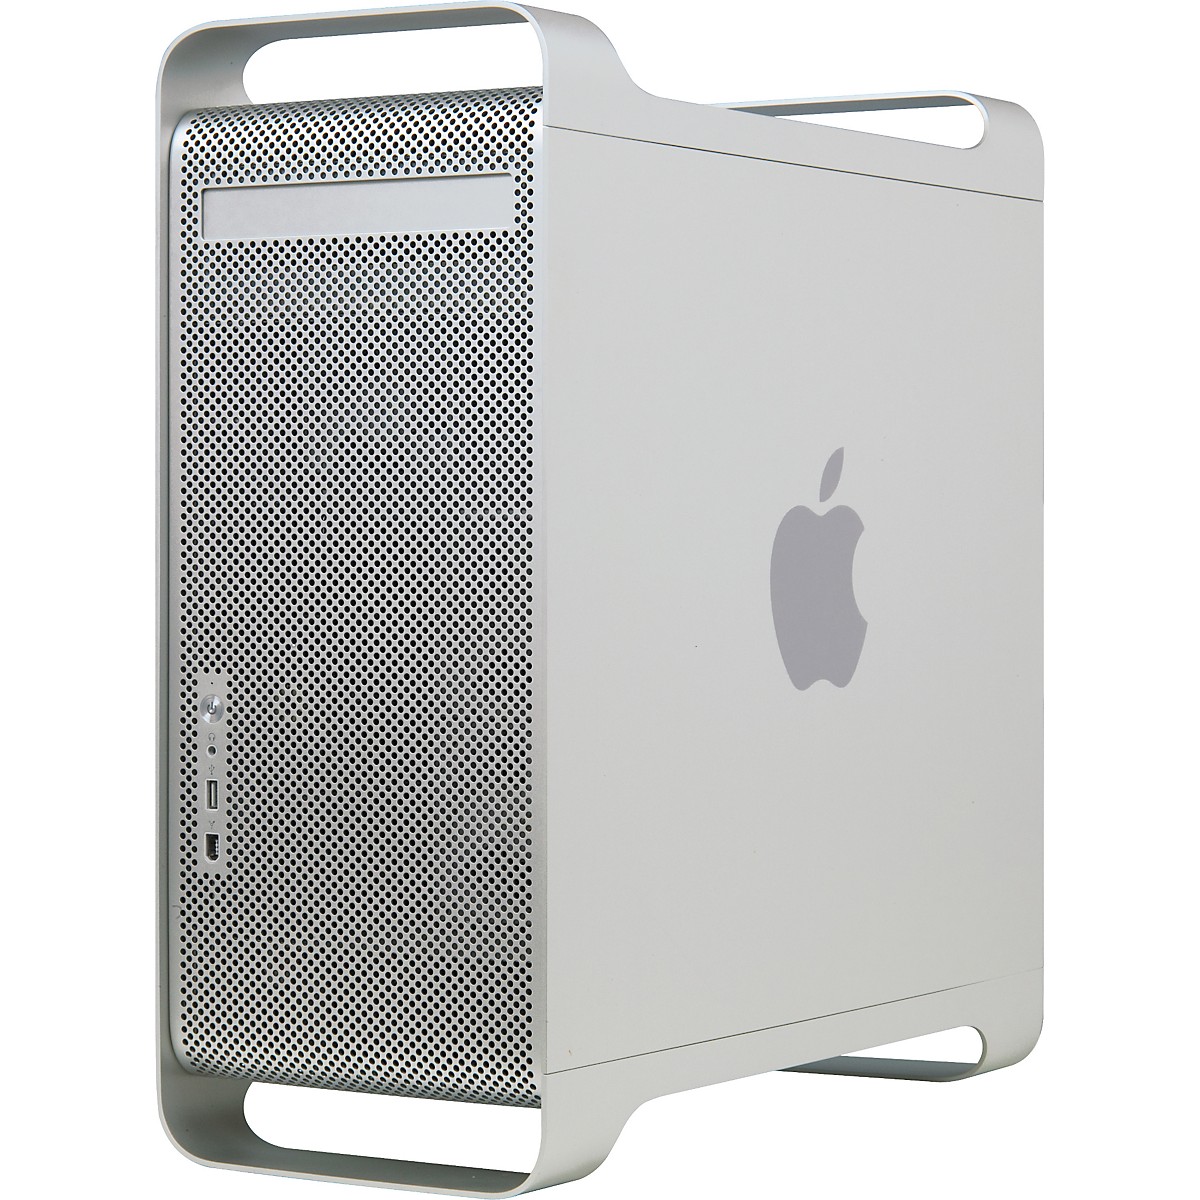 apple power mac g5 desktop specs